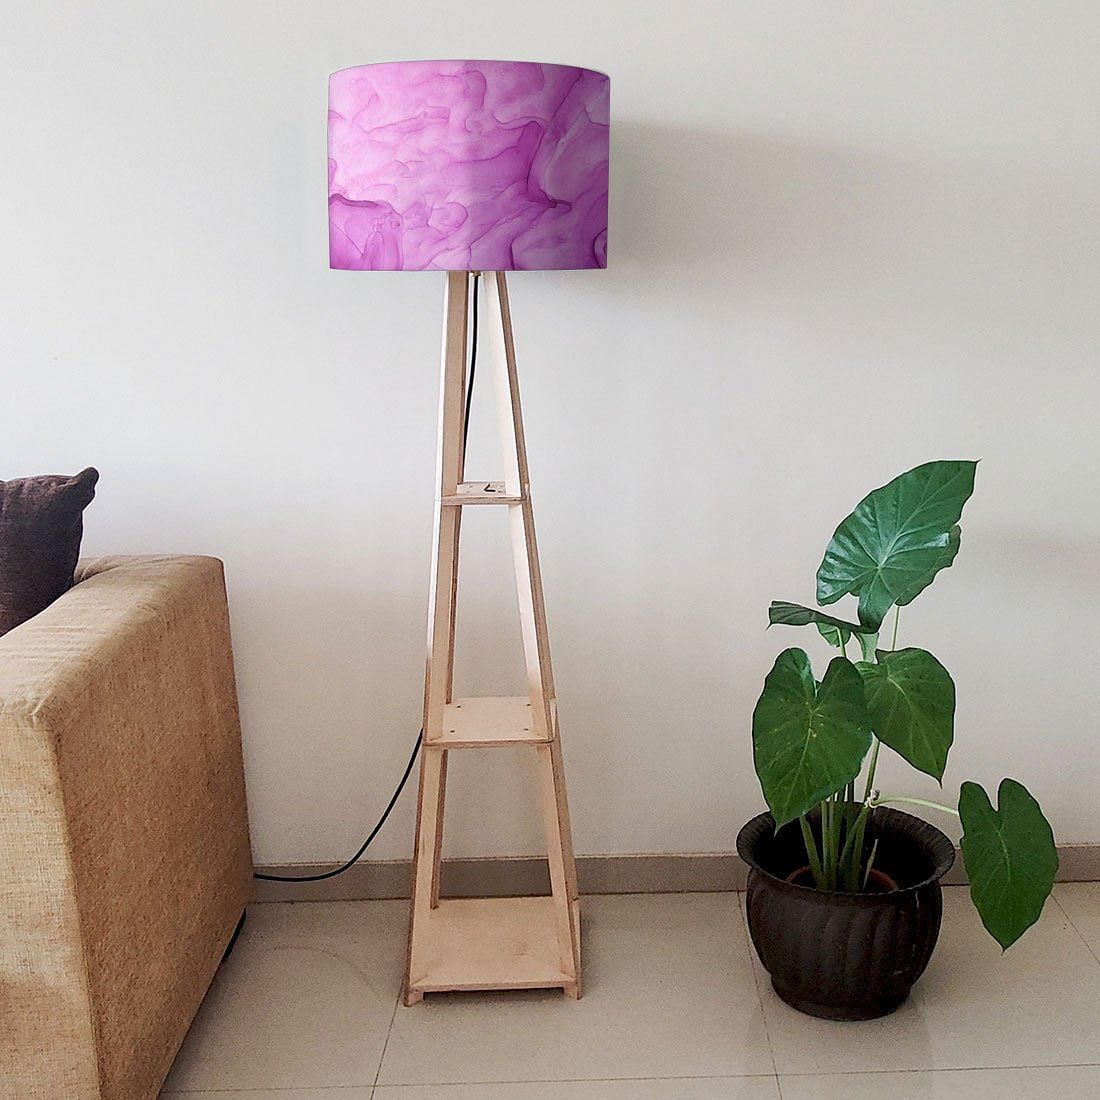 Purple Floor Lamp with Shelves Night Light - Nutcase